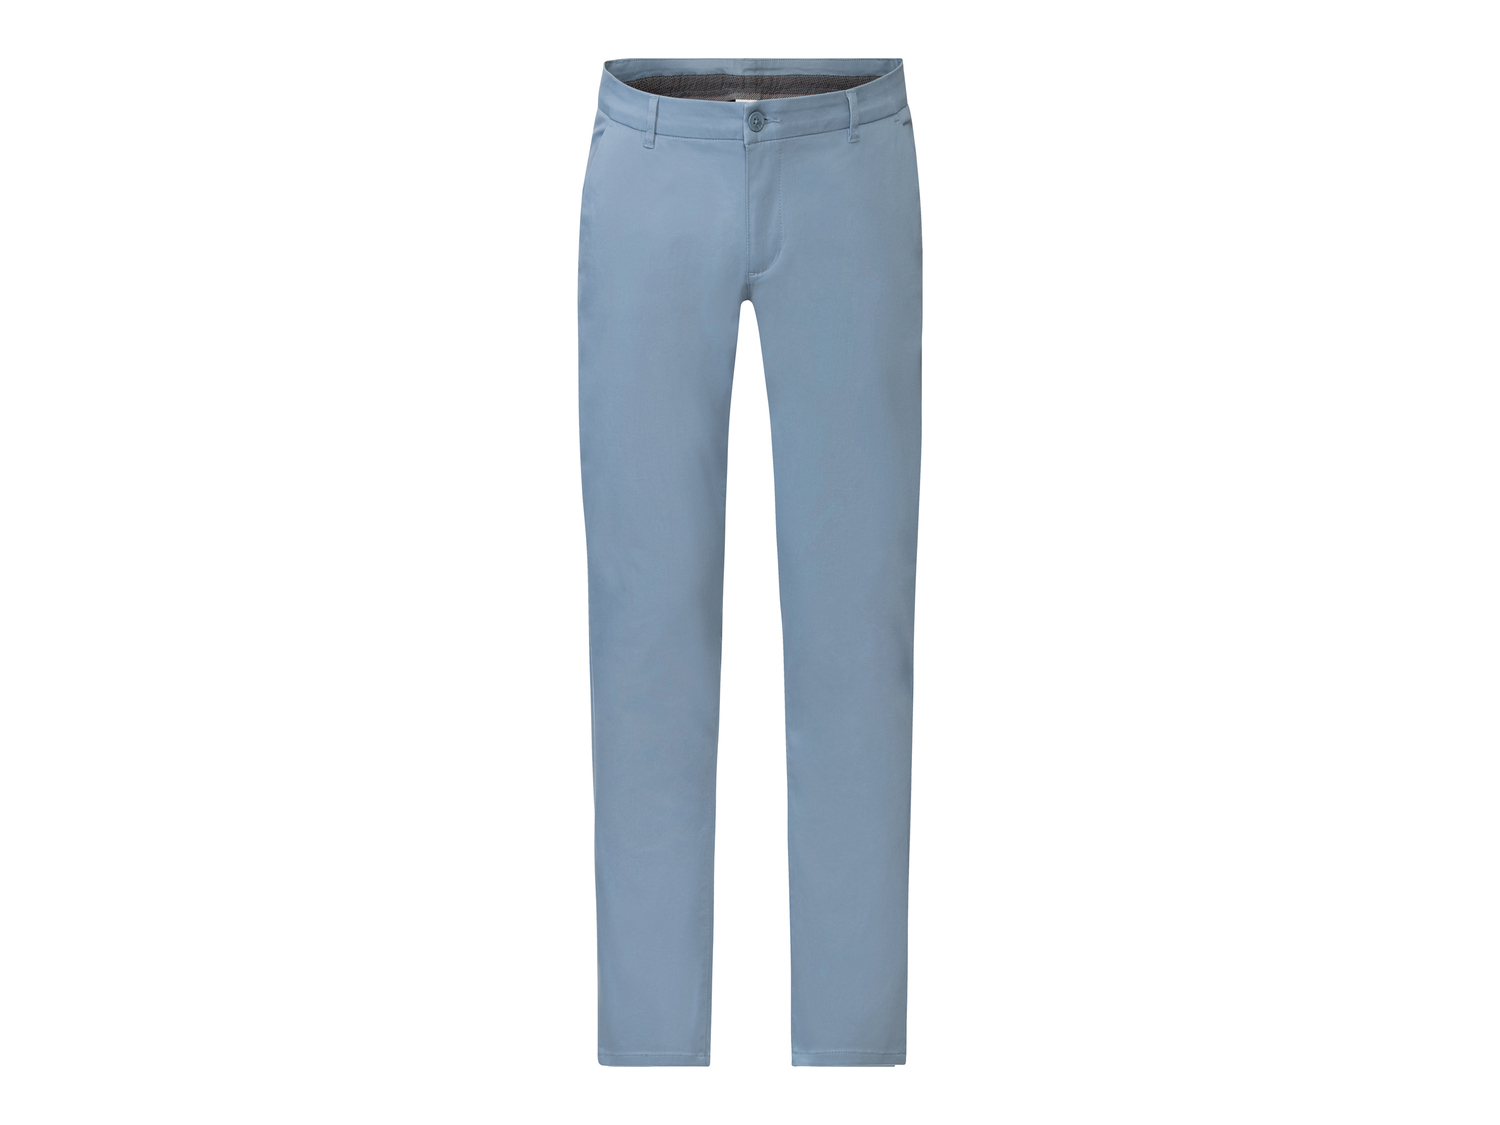 Pantaloni Slim Fit da uomo Livergy, prezzo 9.99 &#8364; 
Misure: 46-56
Taglie ...